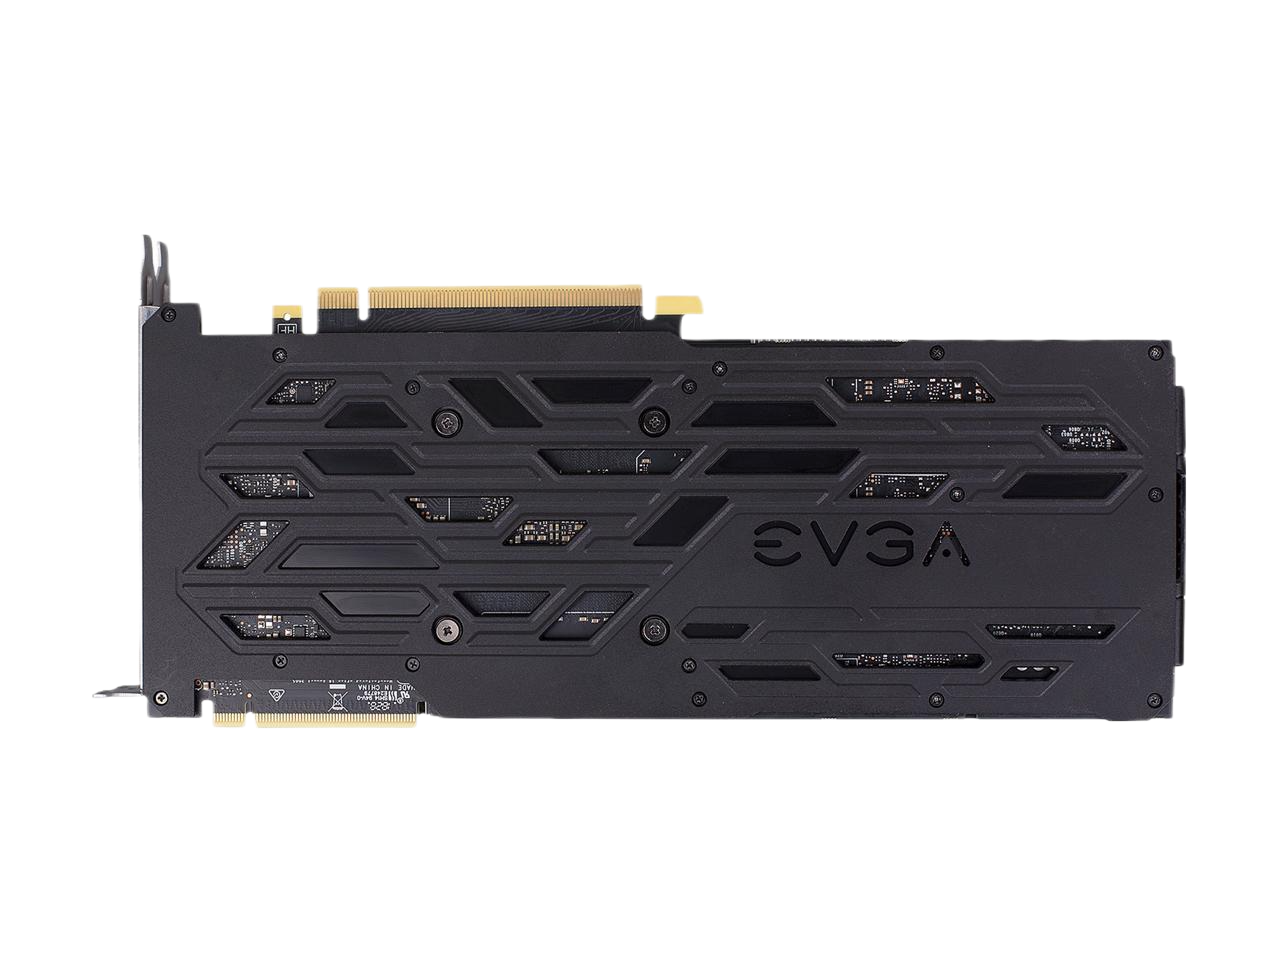 EVGA GeForce RTX 2080 BLACK EDITION GAMING 8GB GDDR6 Dual HDB Fans & RGB LED Video Graphics Card 08G-P4-2081-KR